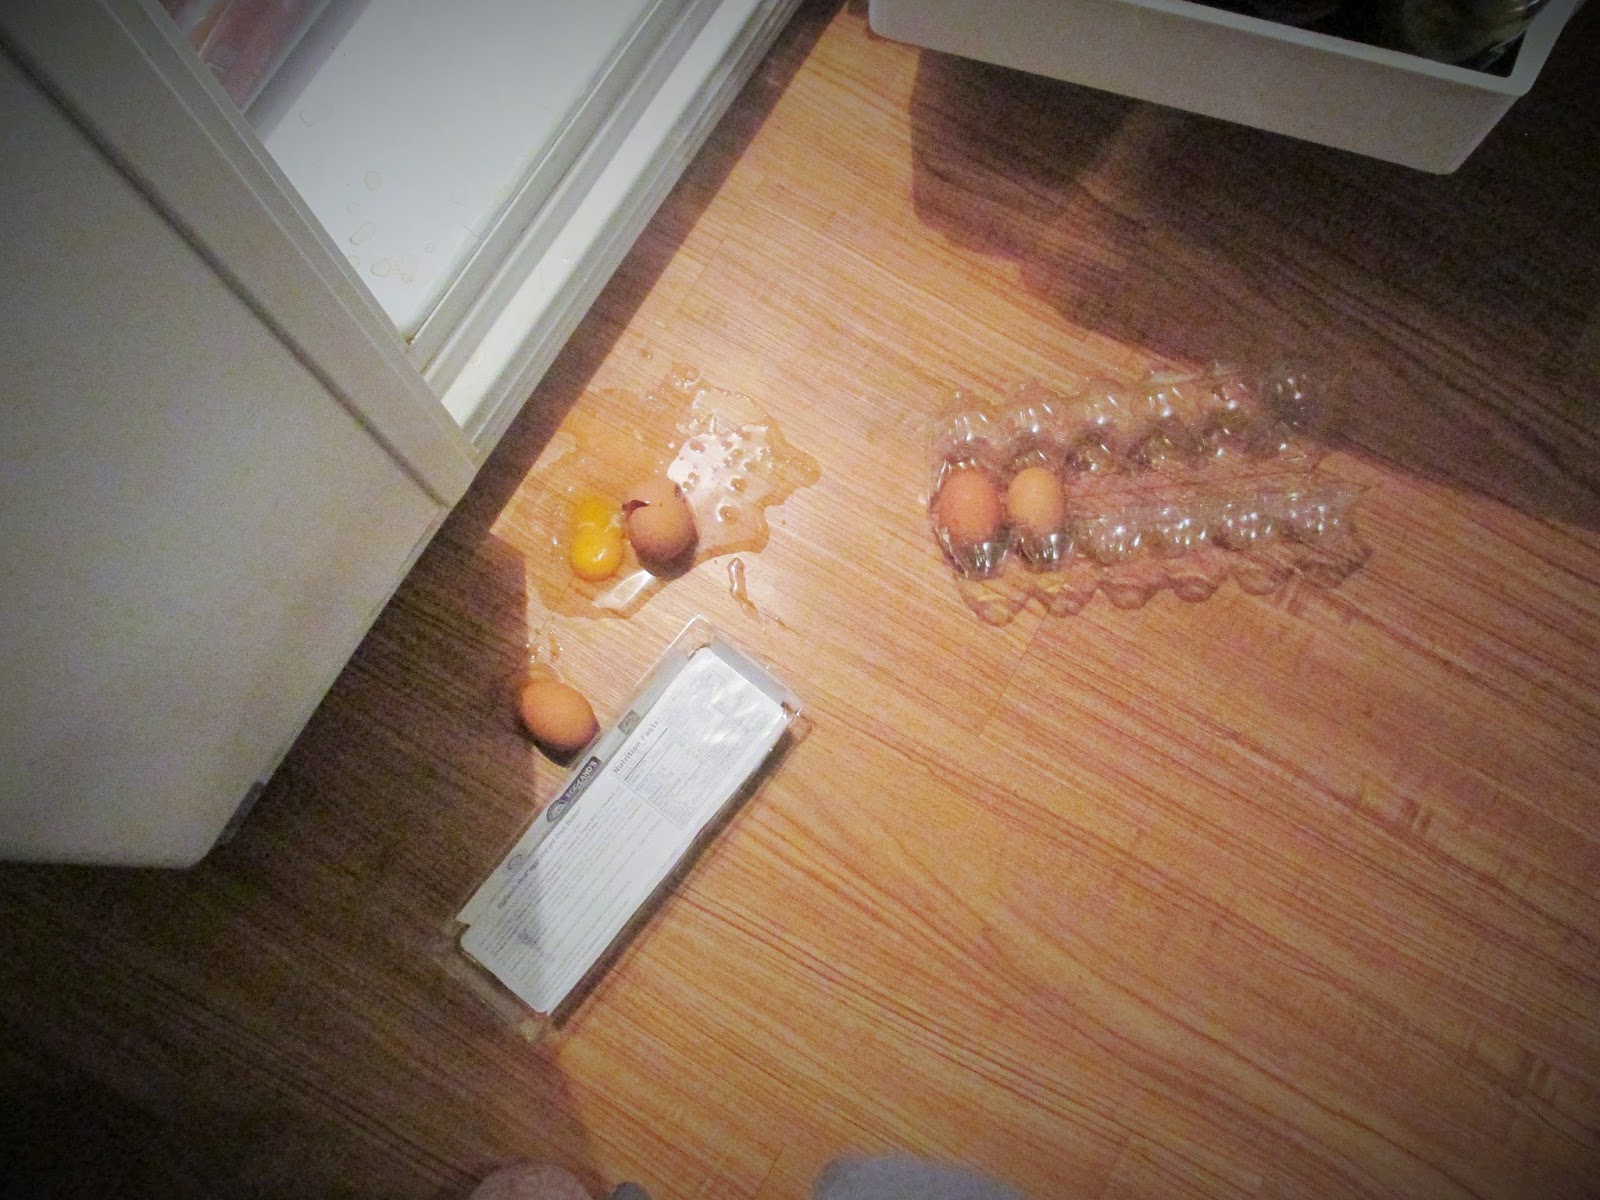 dropped dozen eggs by my refrigerator